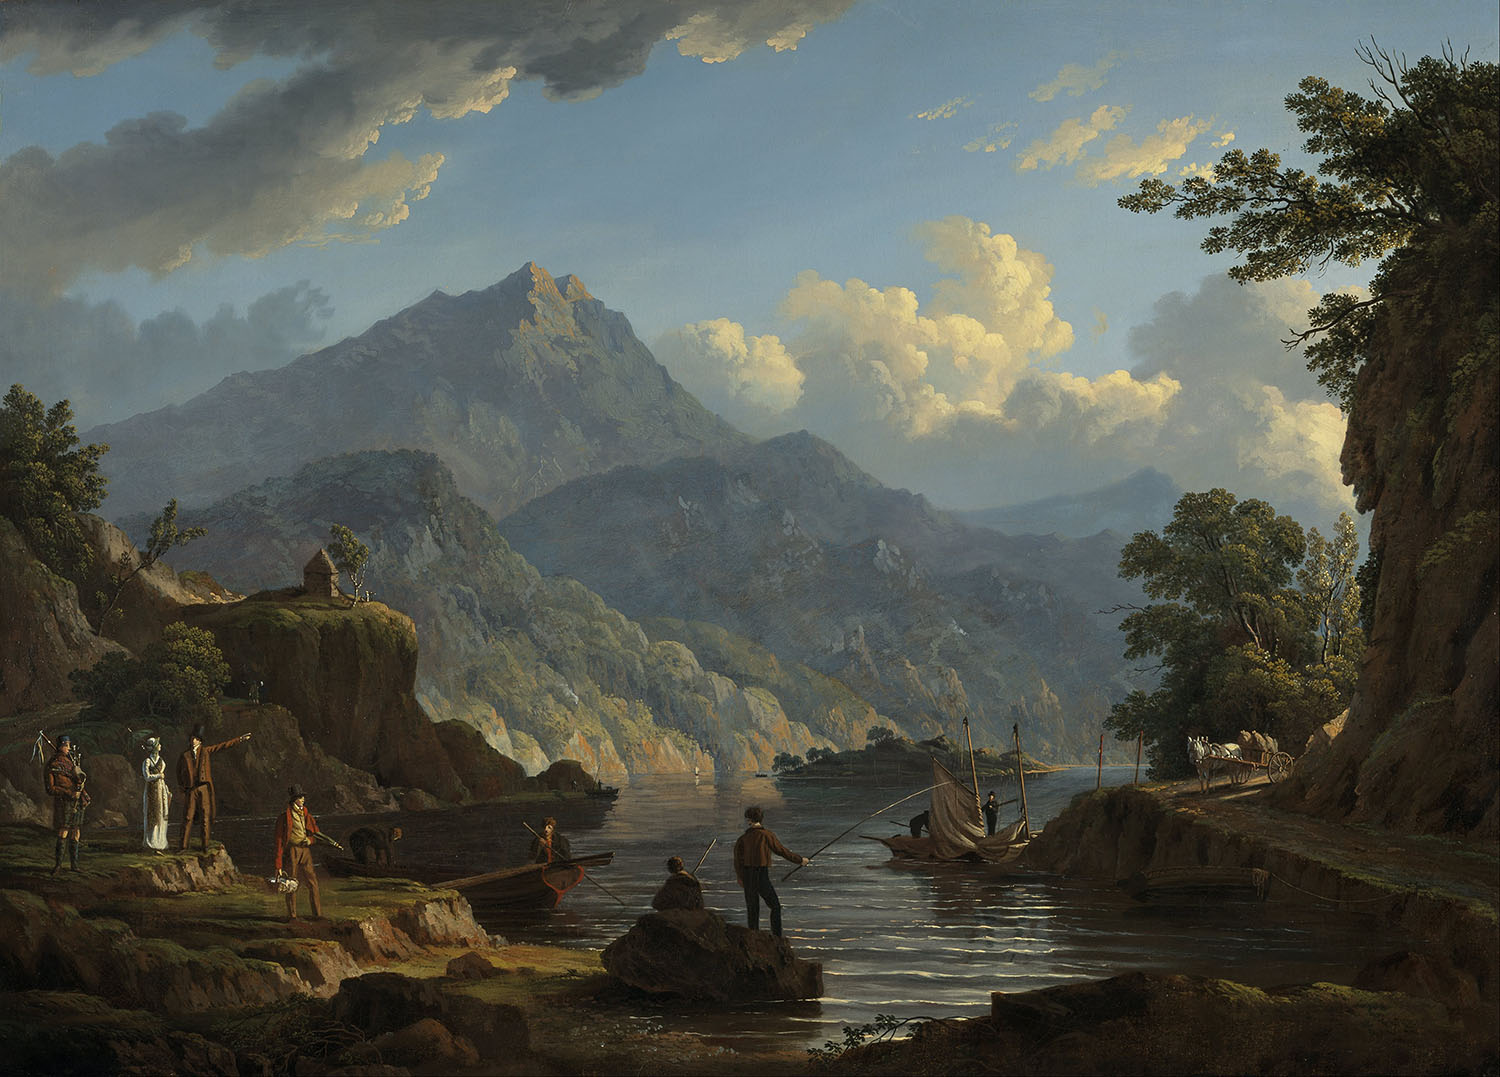 Landscape with Tourists at Loch Katrine, John Knox, 1815.